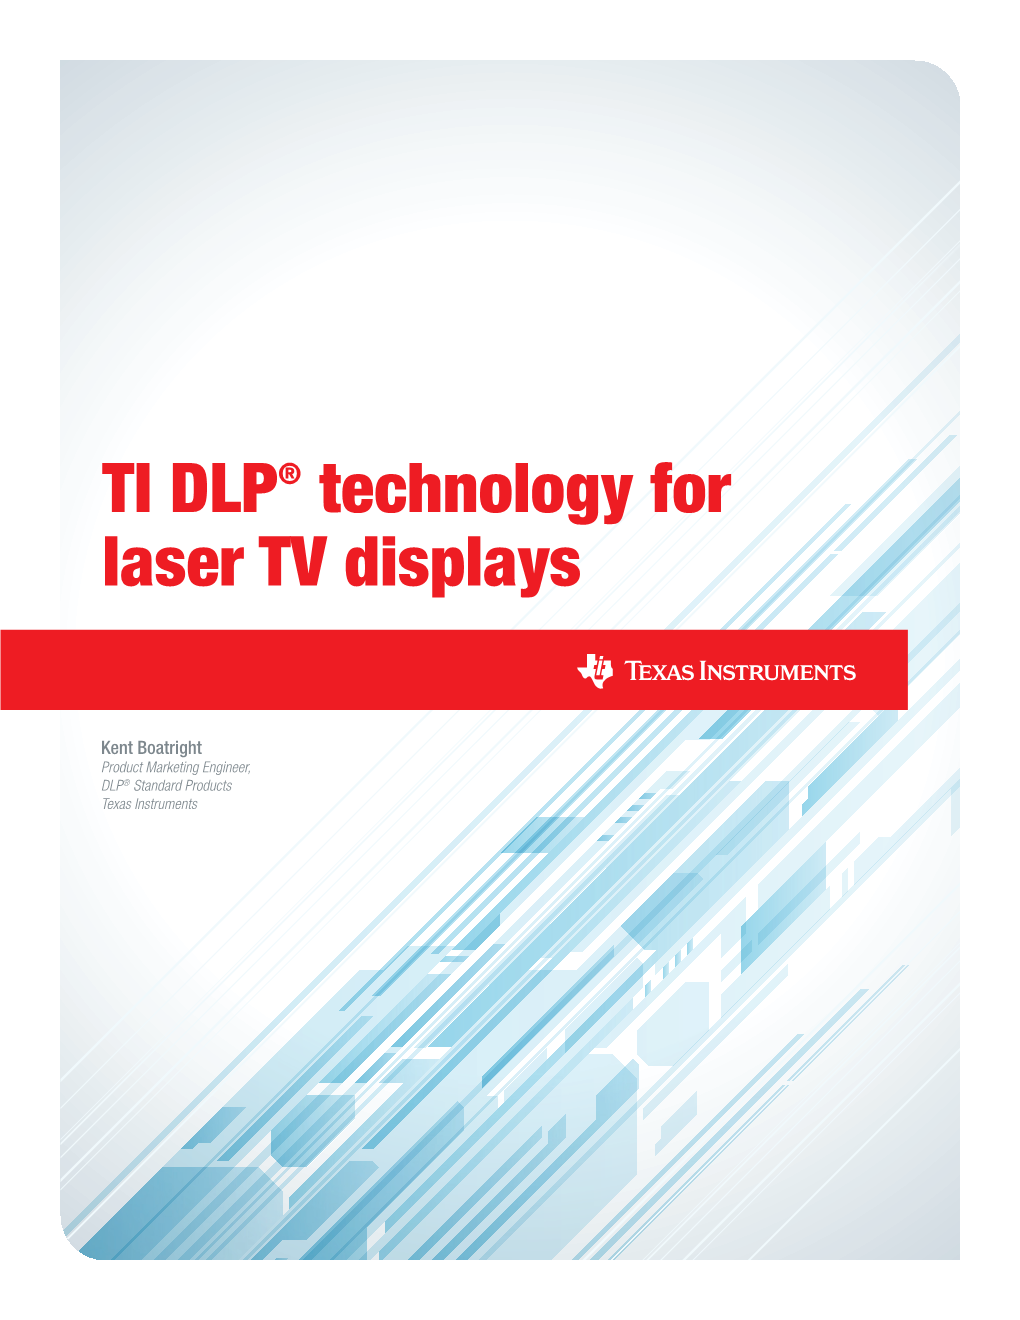 TI DLP® Technology for Laser TV Displays (Rev. A)